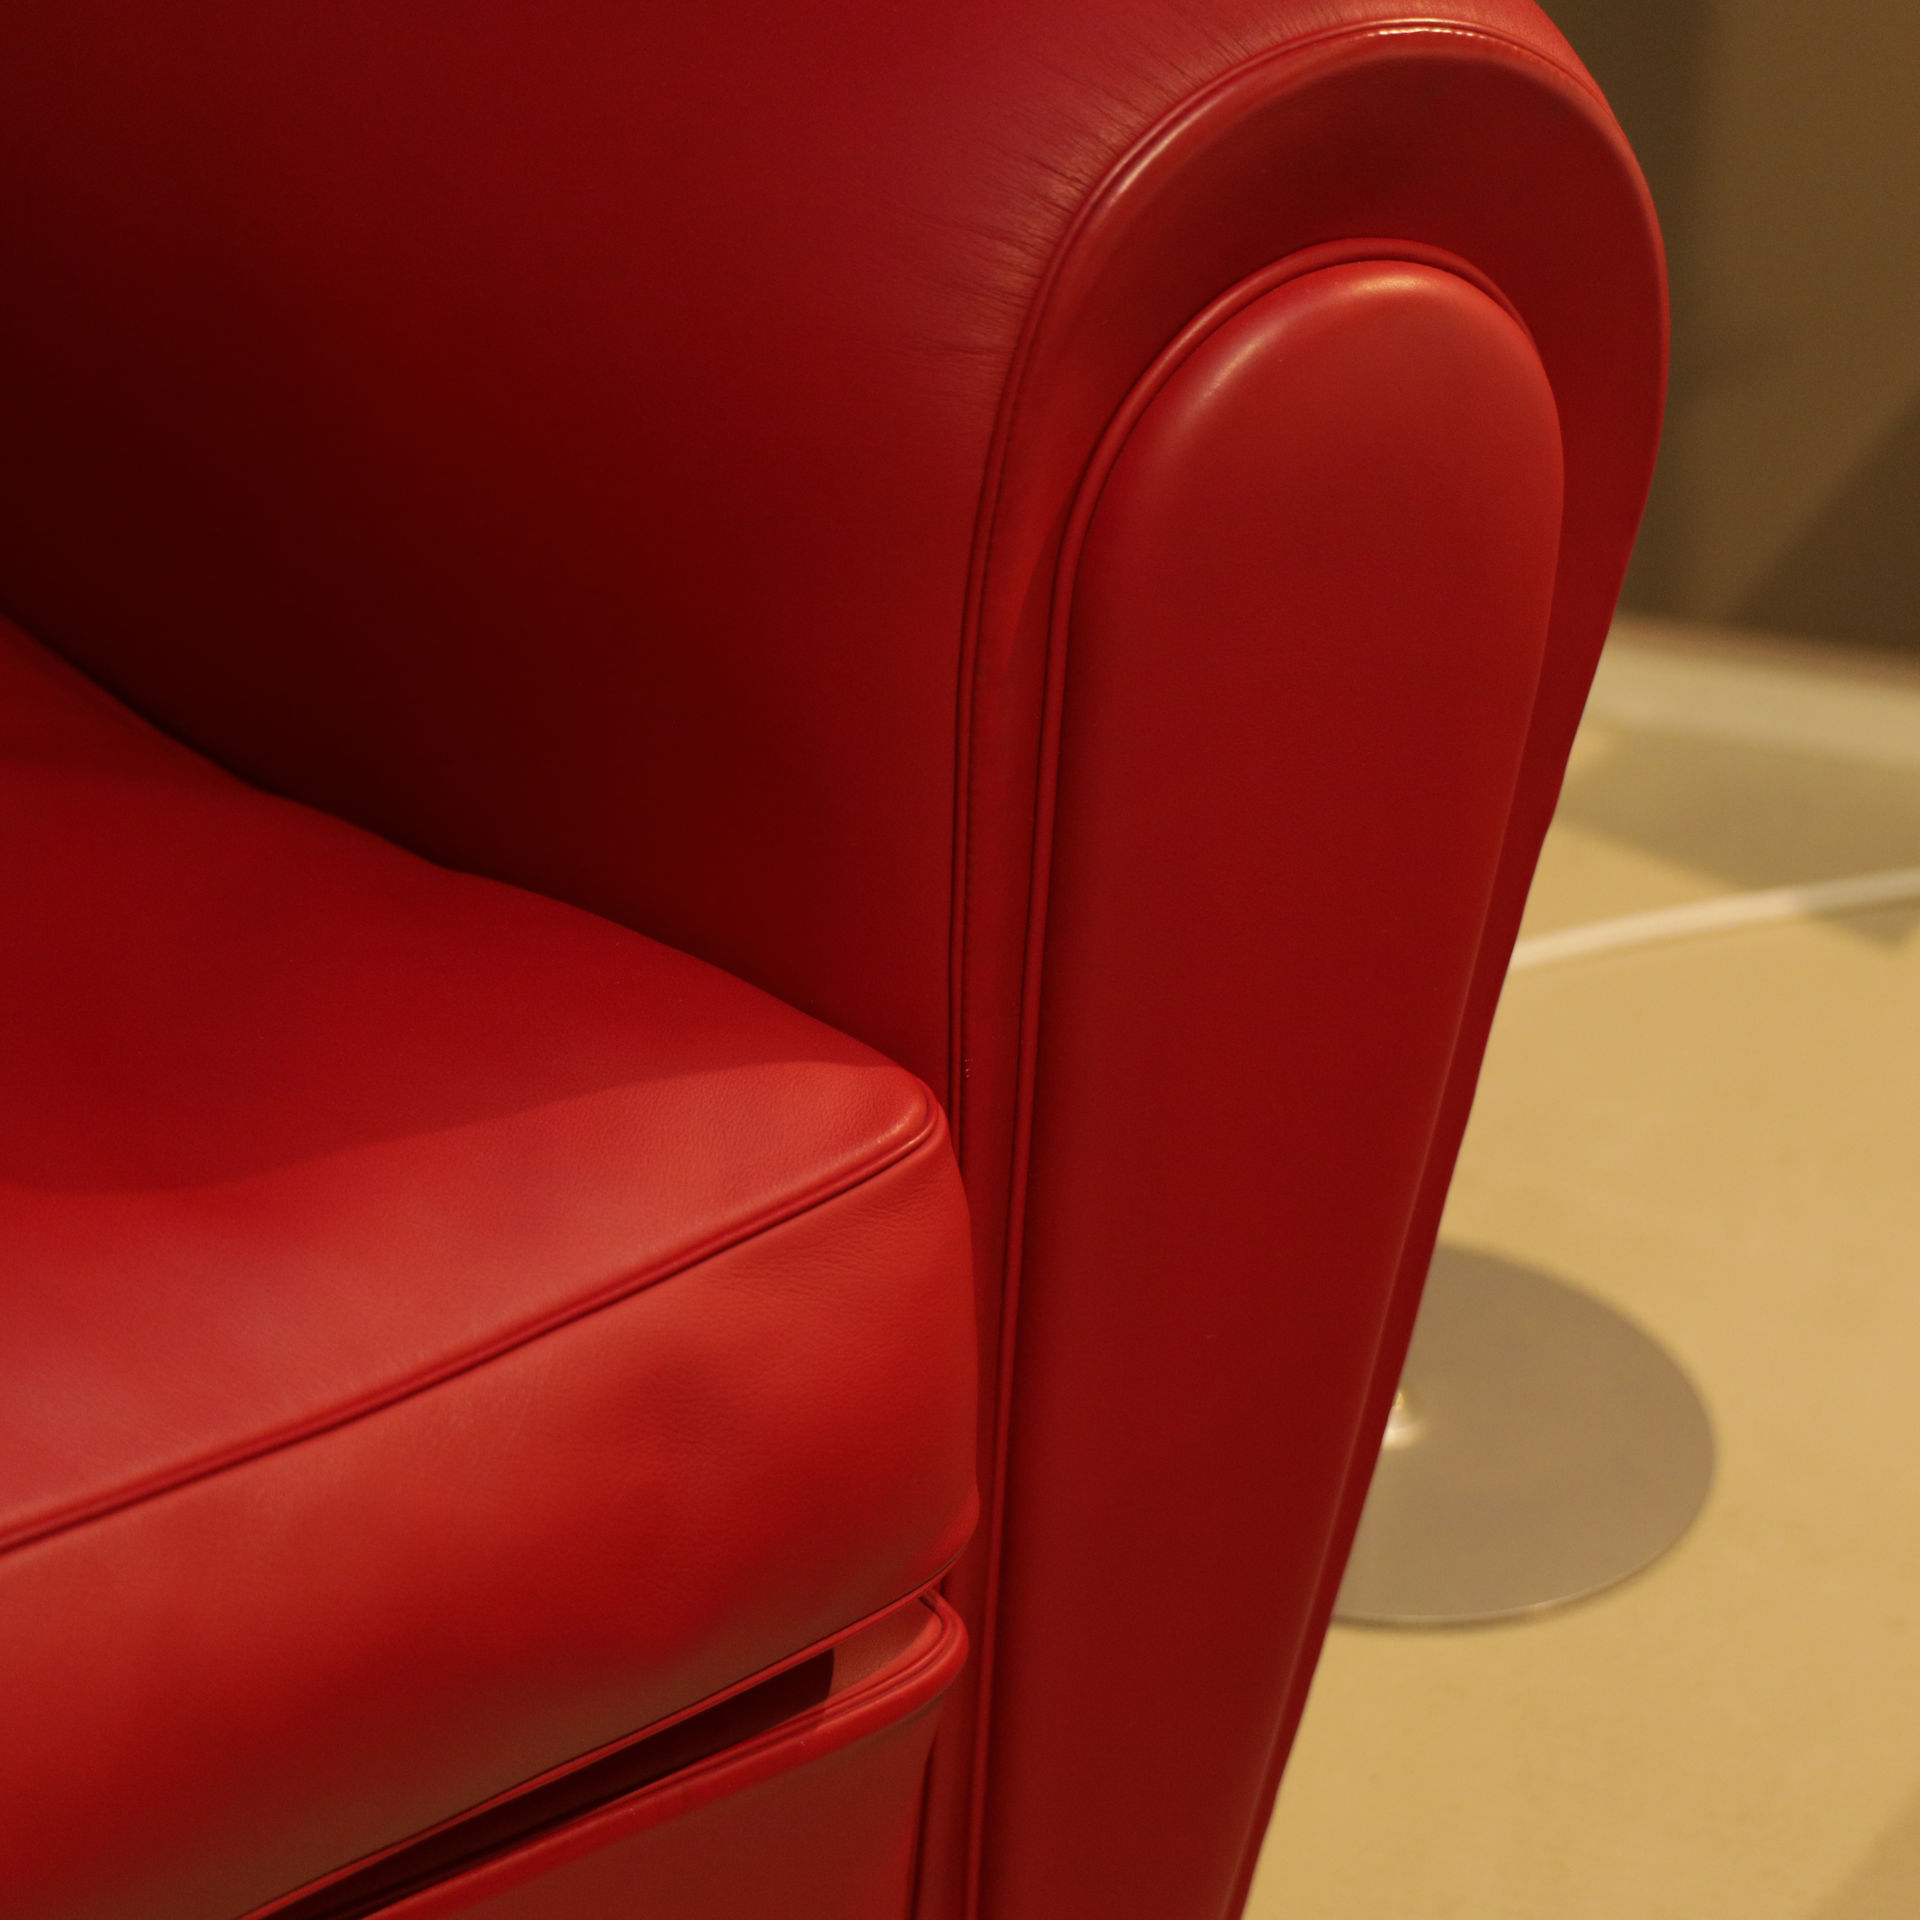 Poltrona Frau Vanity Fair fauteuil - Details